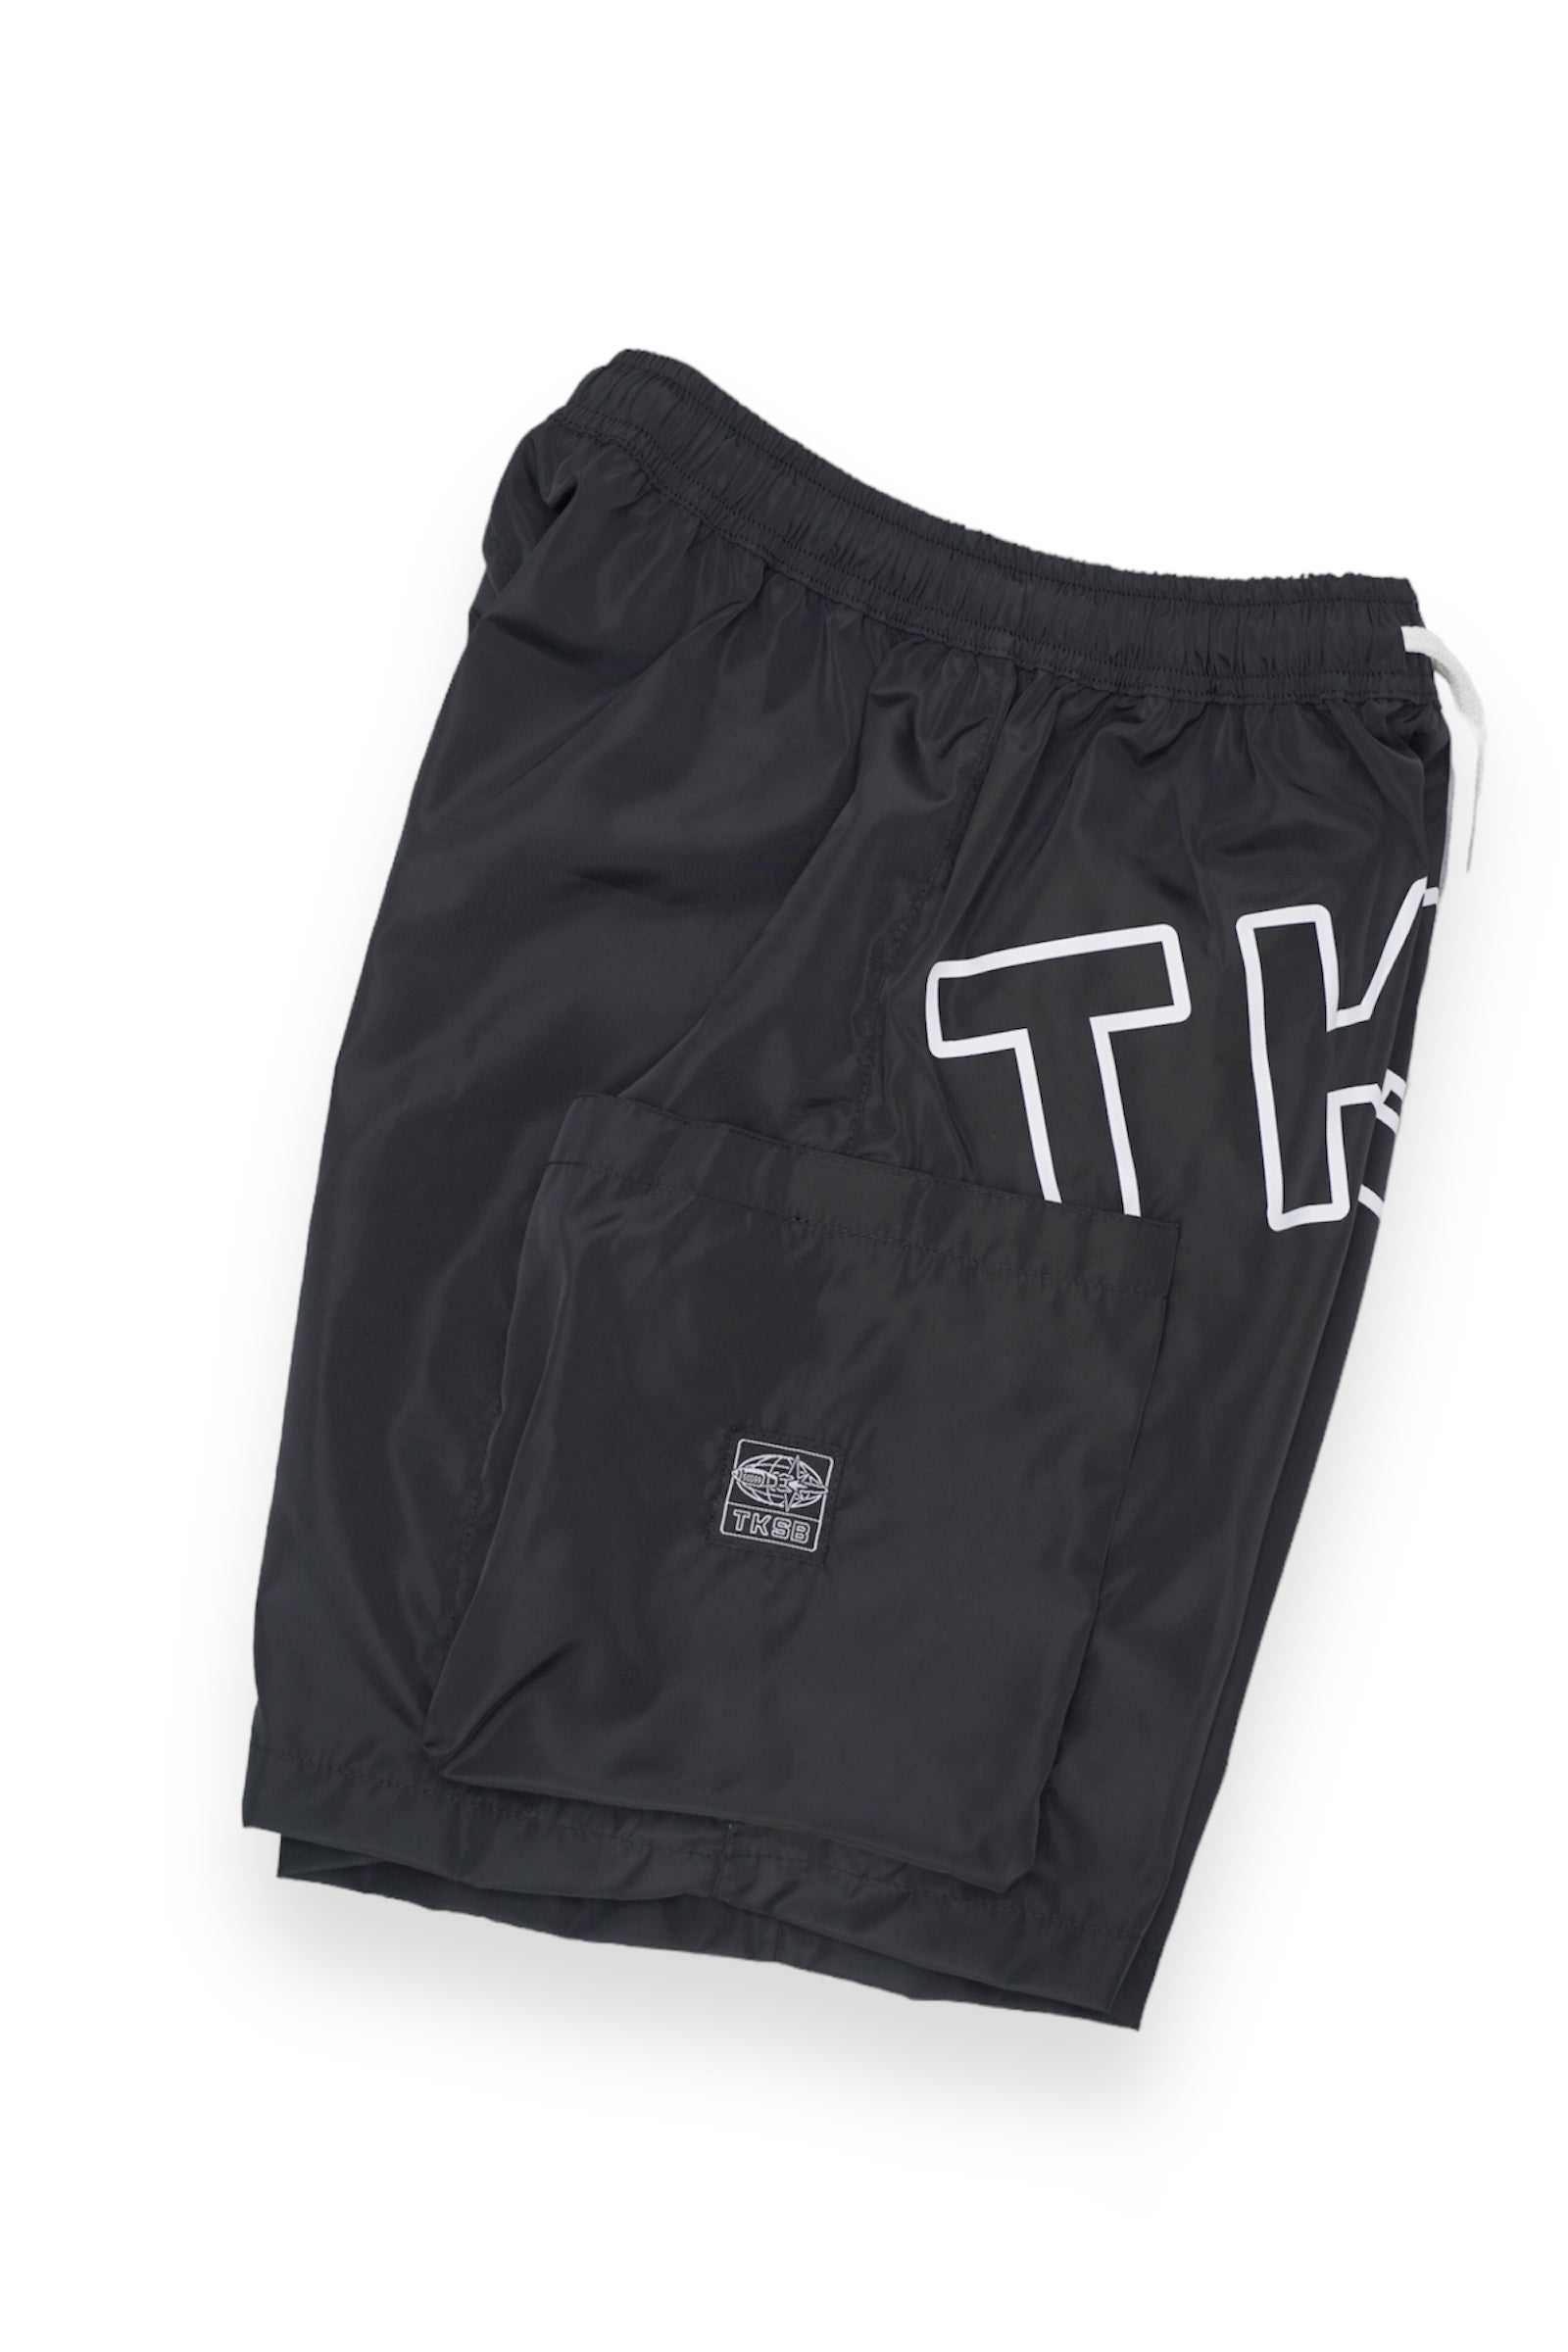 TKSB - Atom Board Shorts